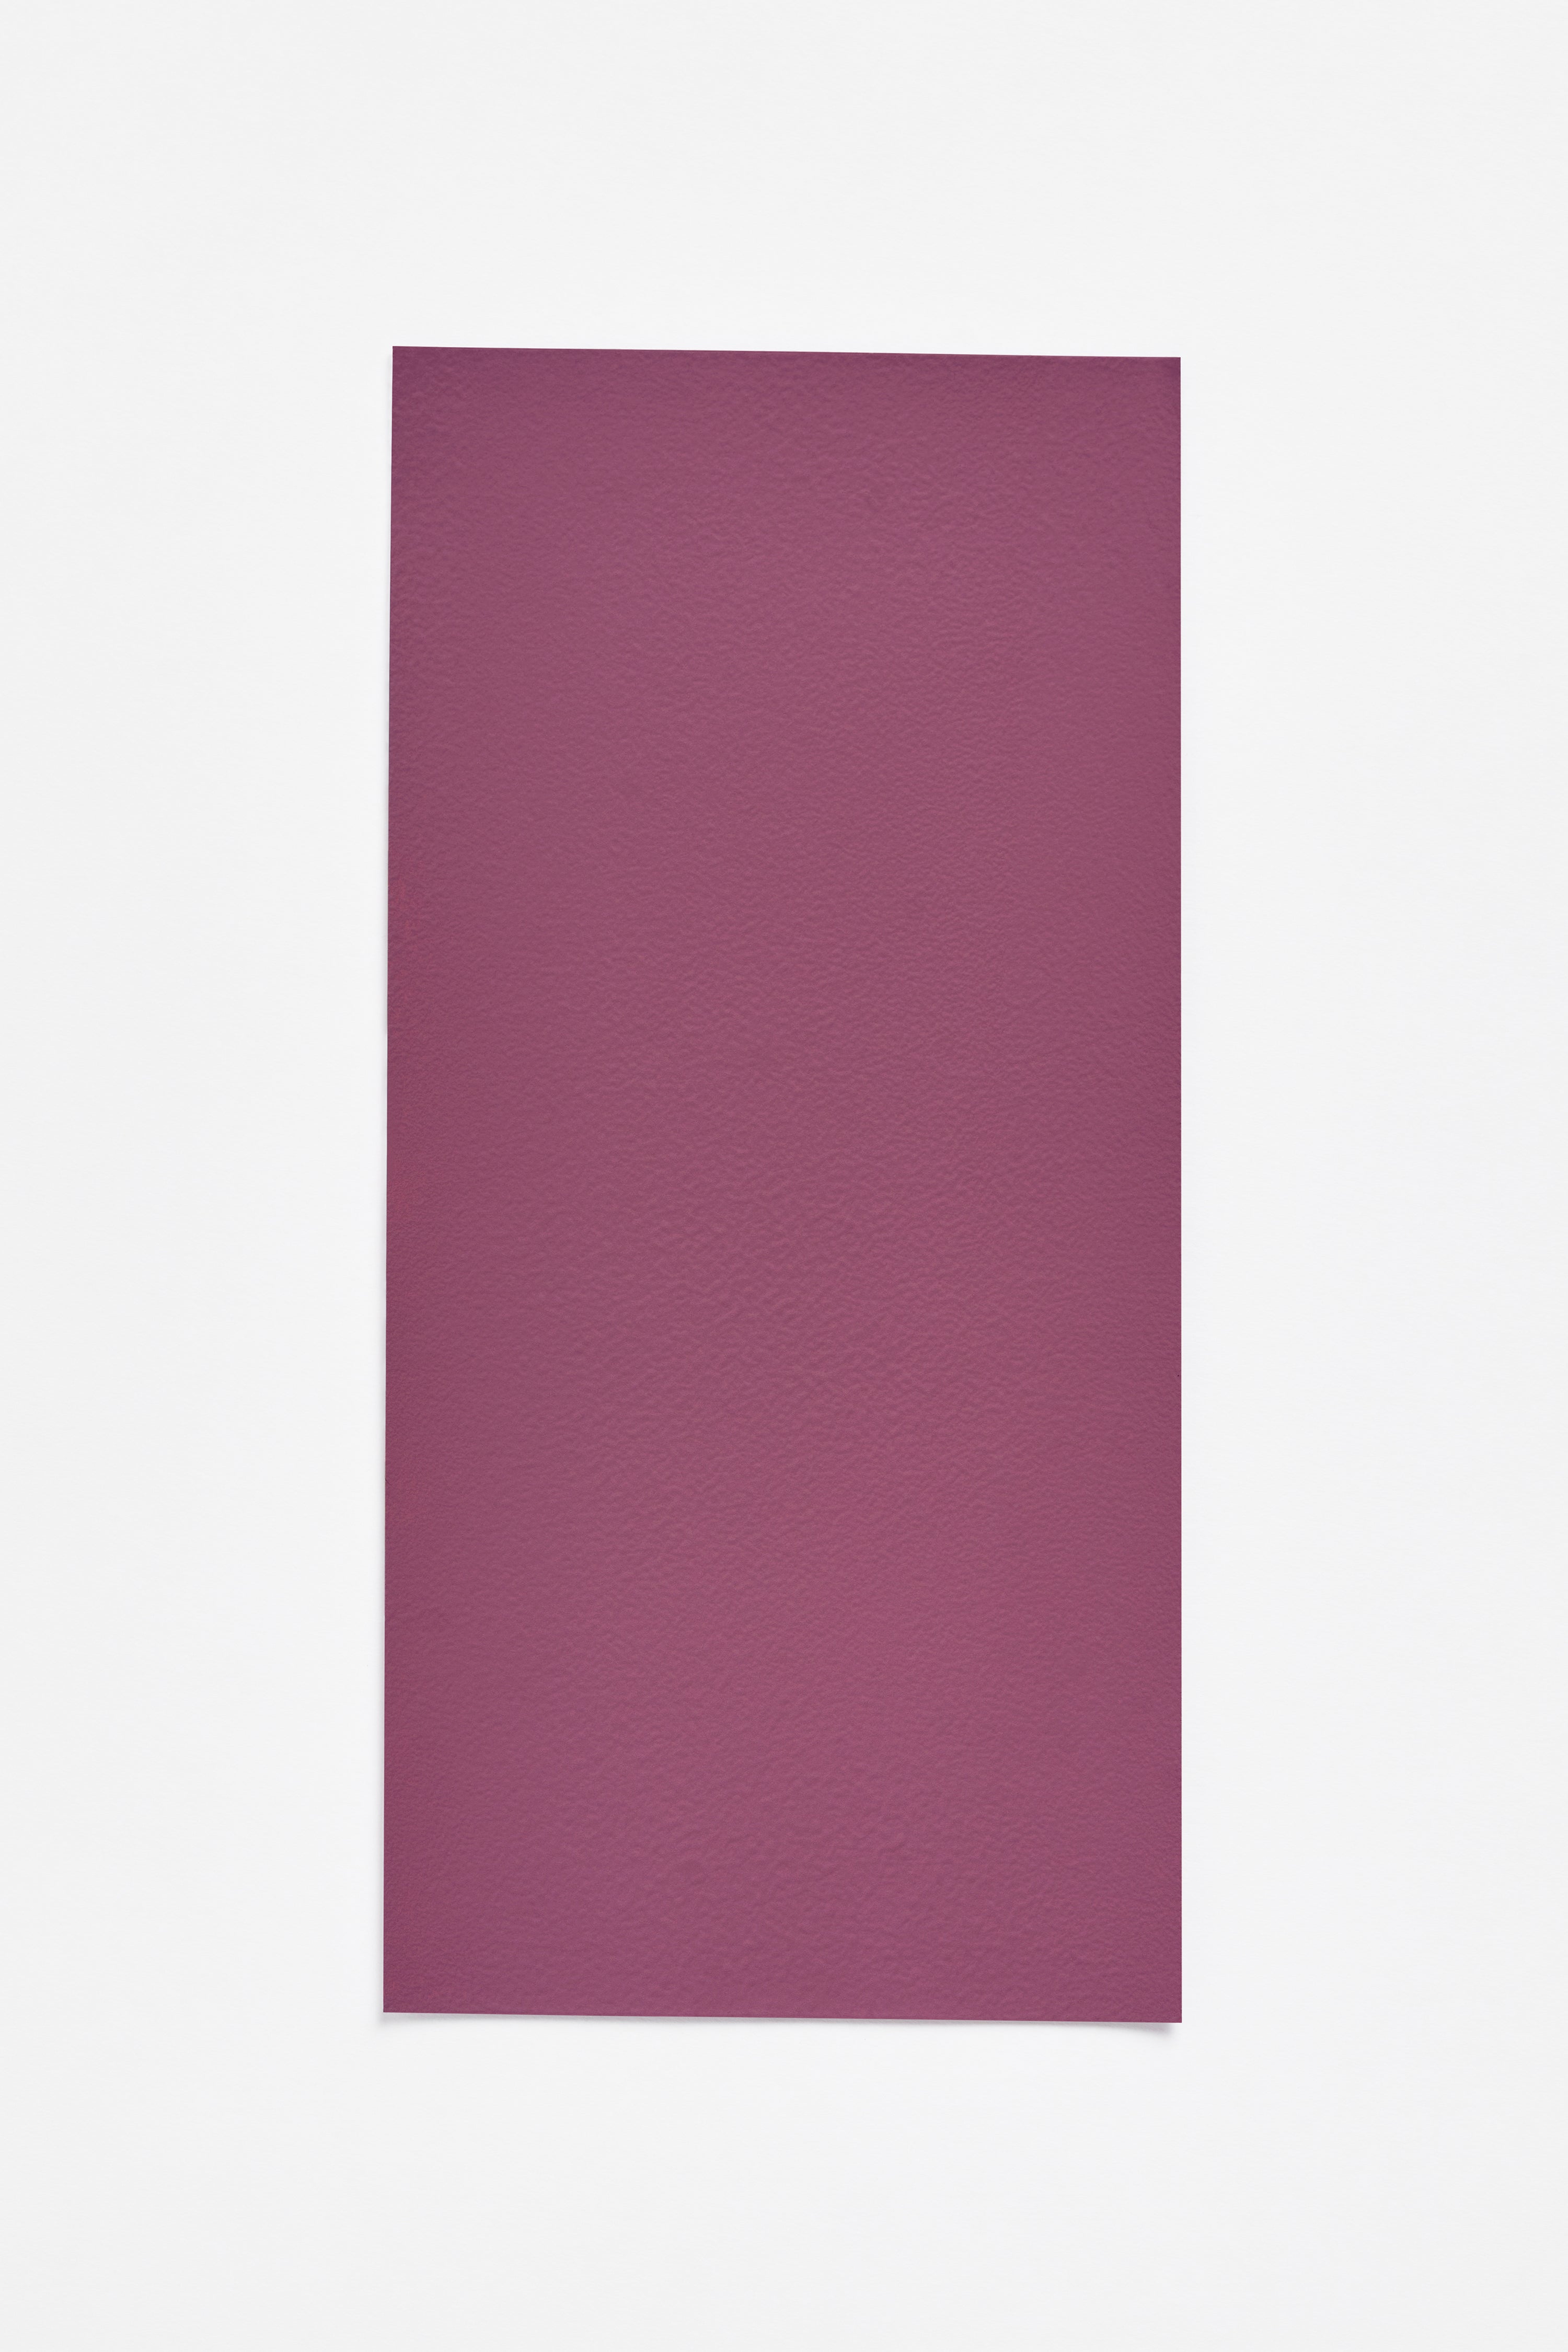 Josef Albers paint colour 01 for Bleo 